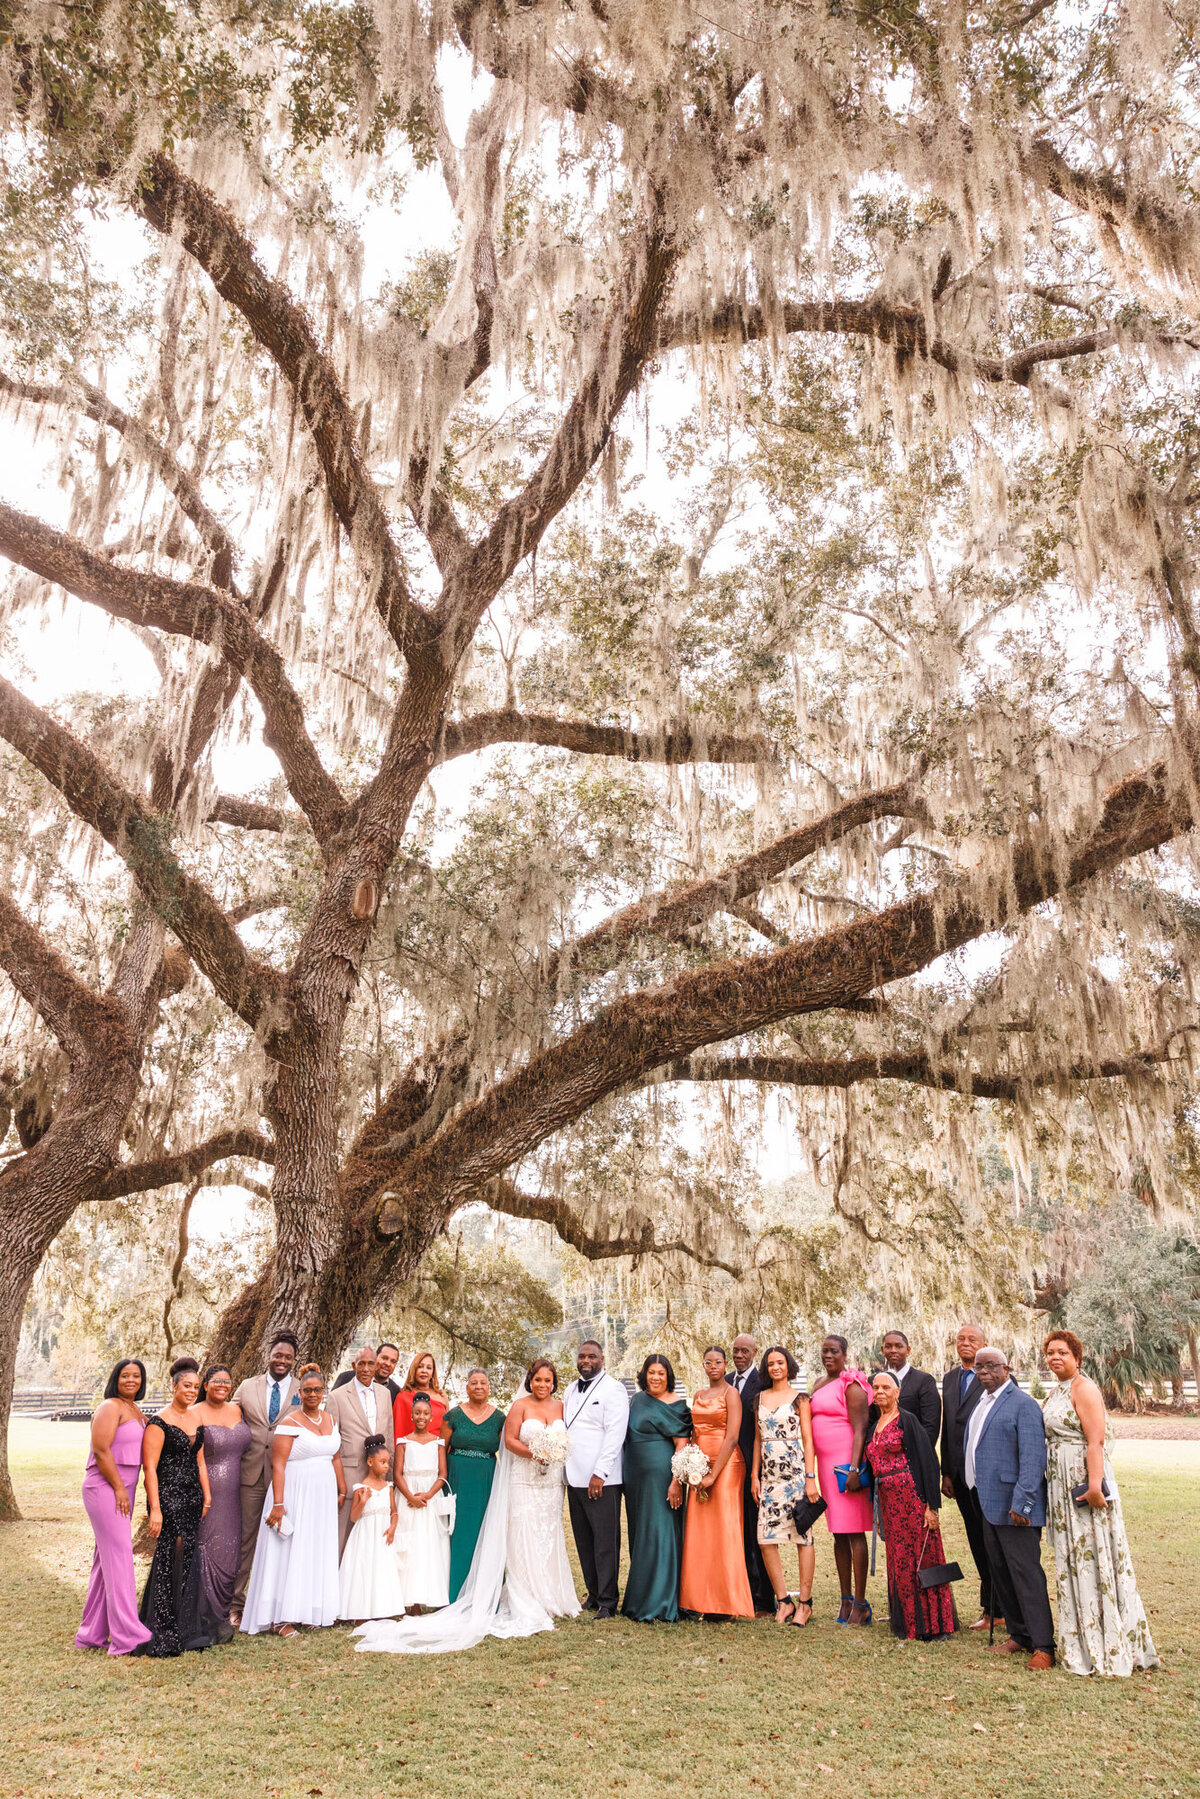 Michael and Mishka-Wedding-Green Cabin Ranch-Astatula, FL-FL Wedding Photographer-Orlando Photographer-Emily Pillon Photography-S-120423-189